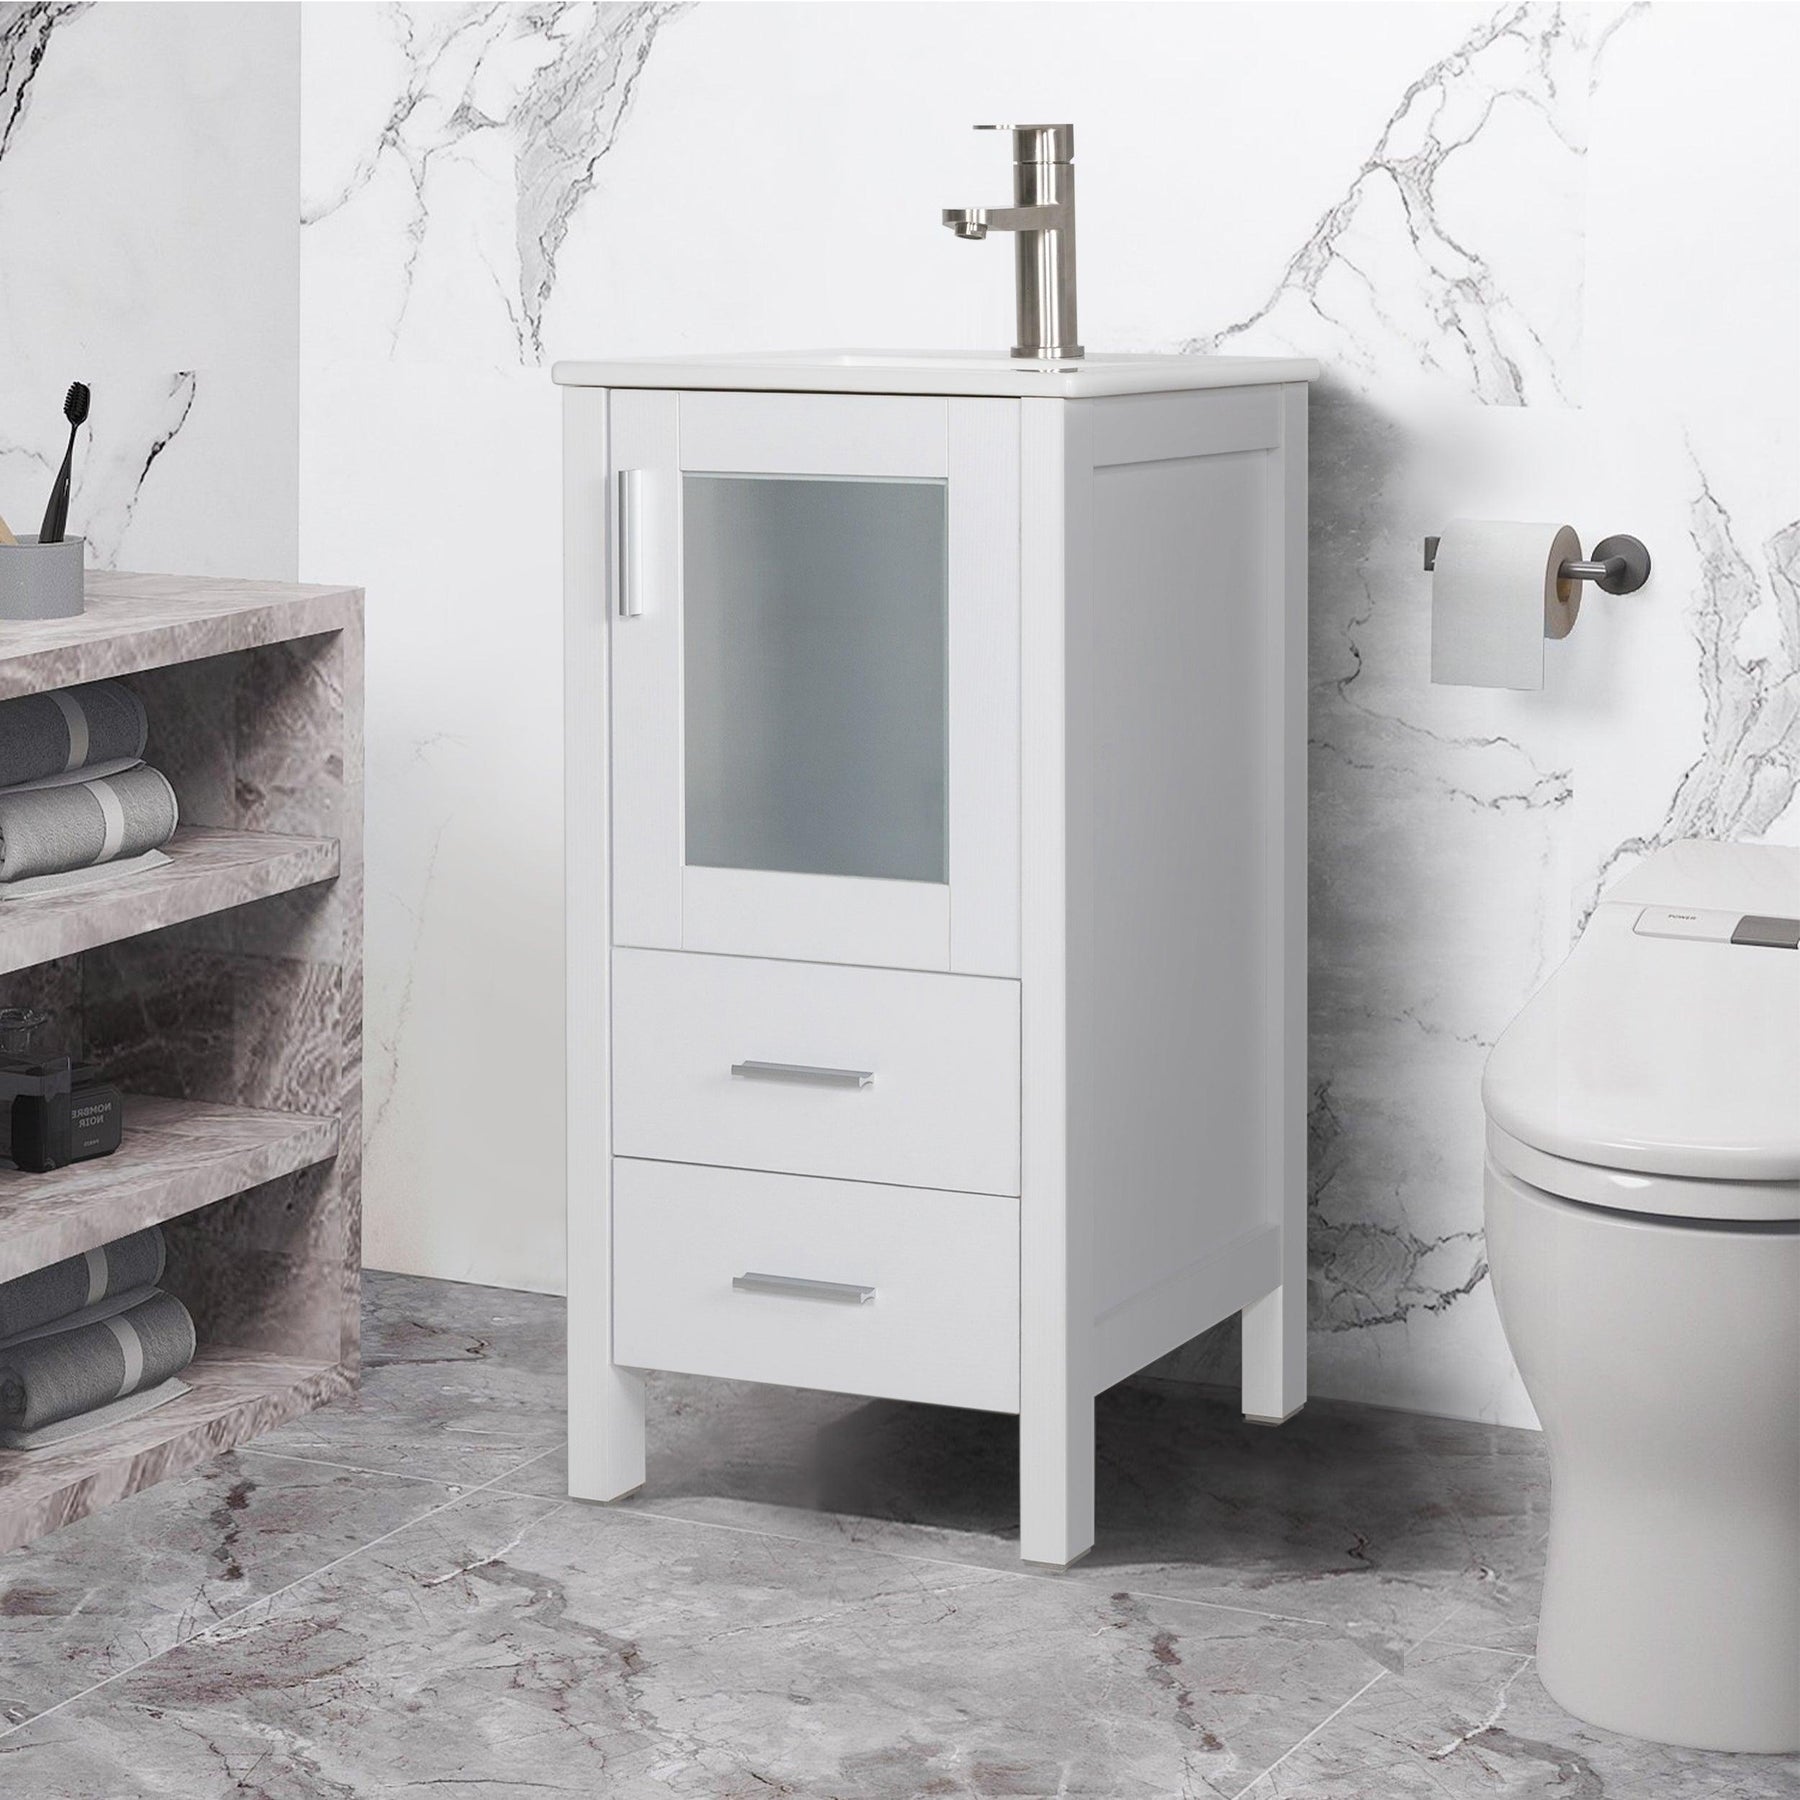 Eclife 16" Small Bathroom Vanity with Undermount Ceramic Sink